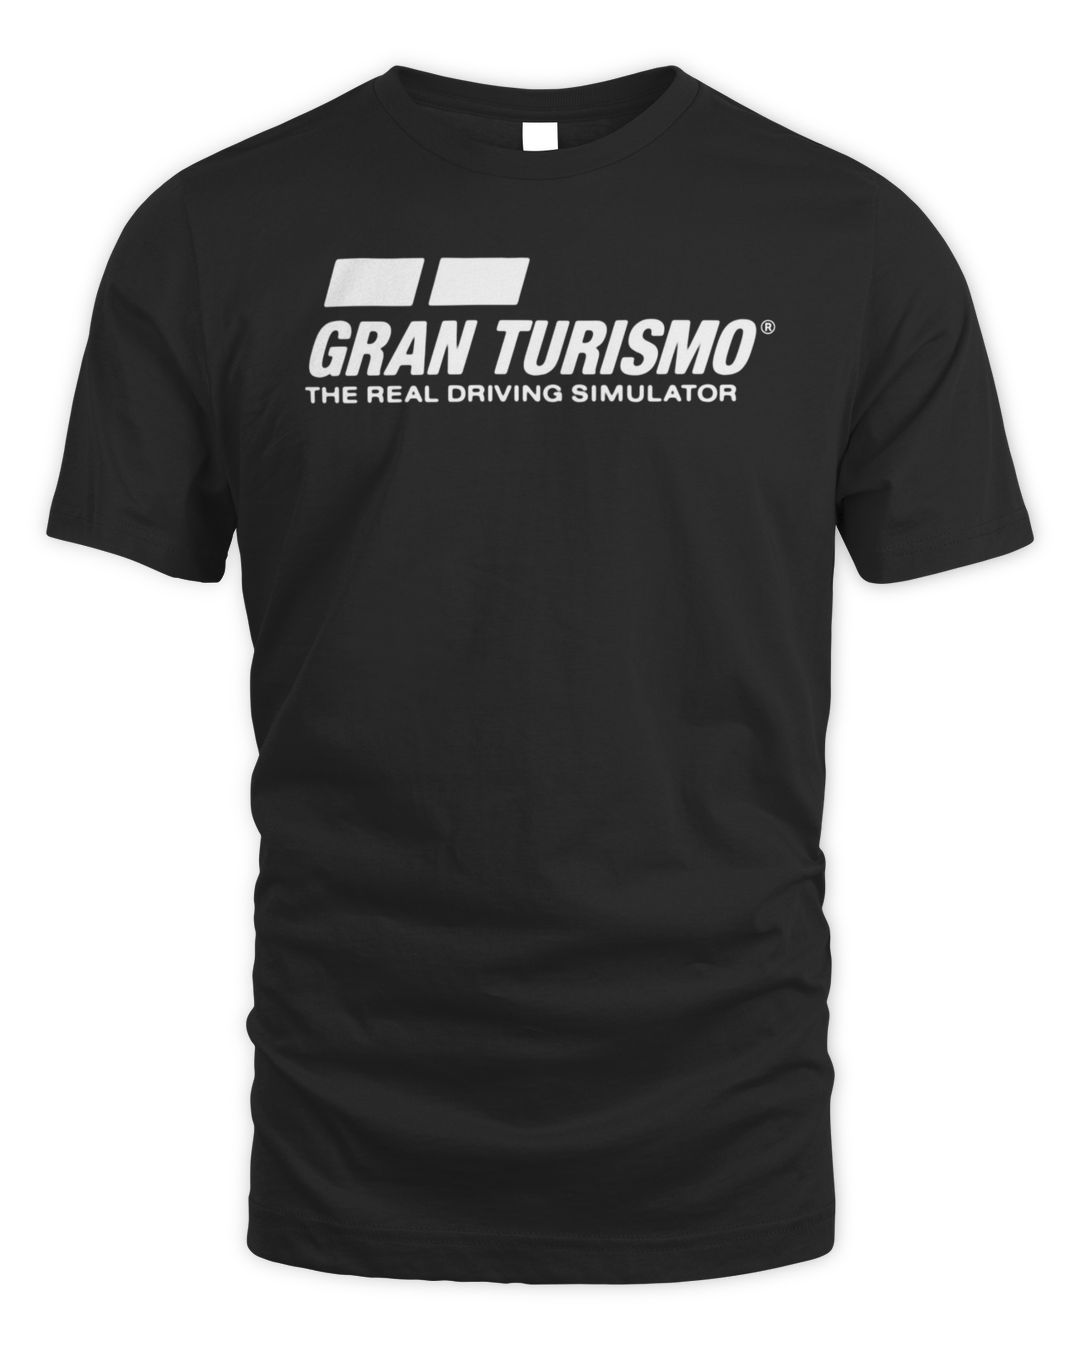 Playstation Merch Gran Turismo Shirt